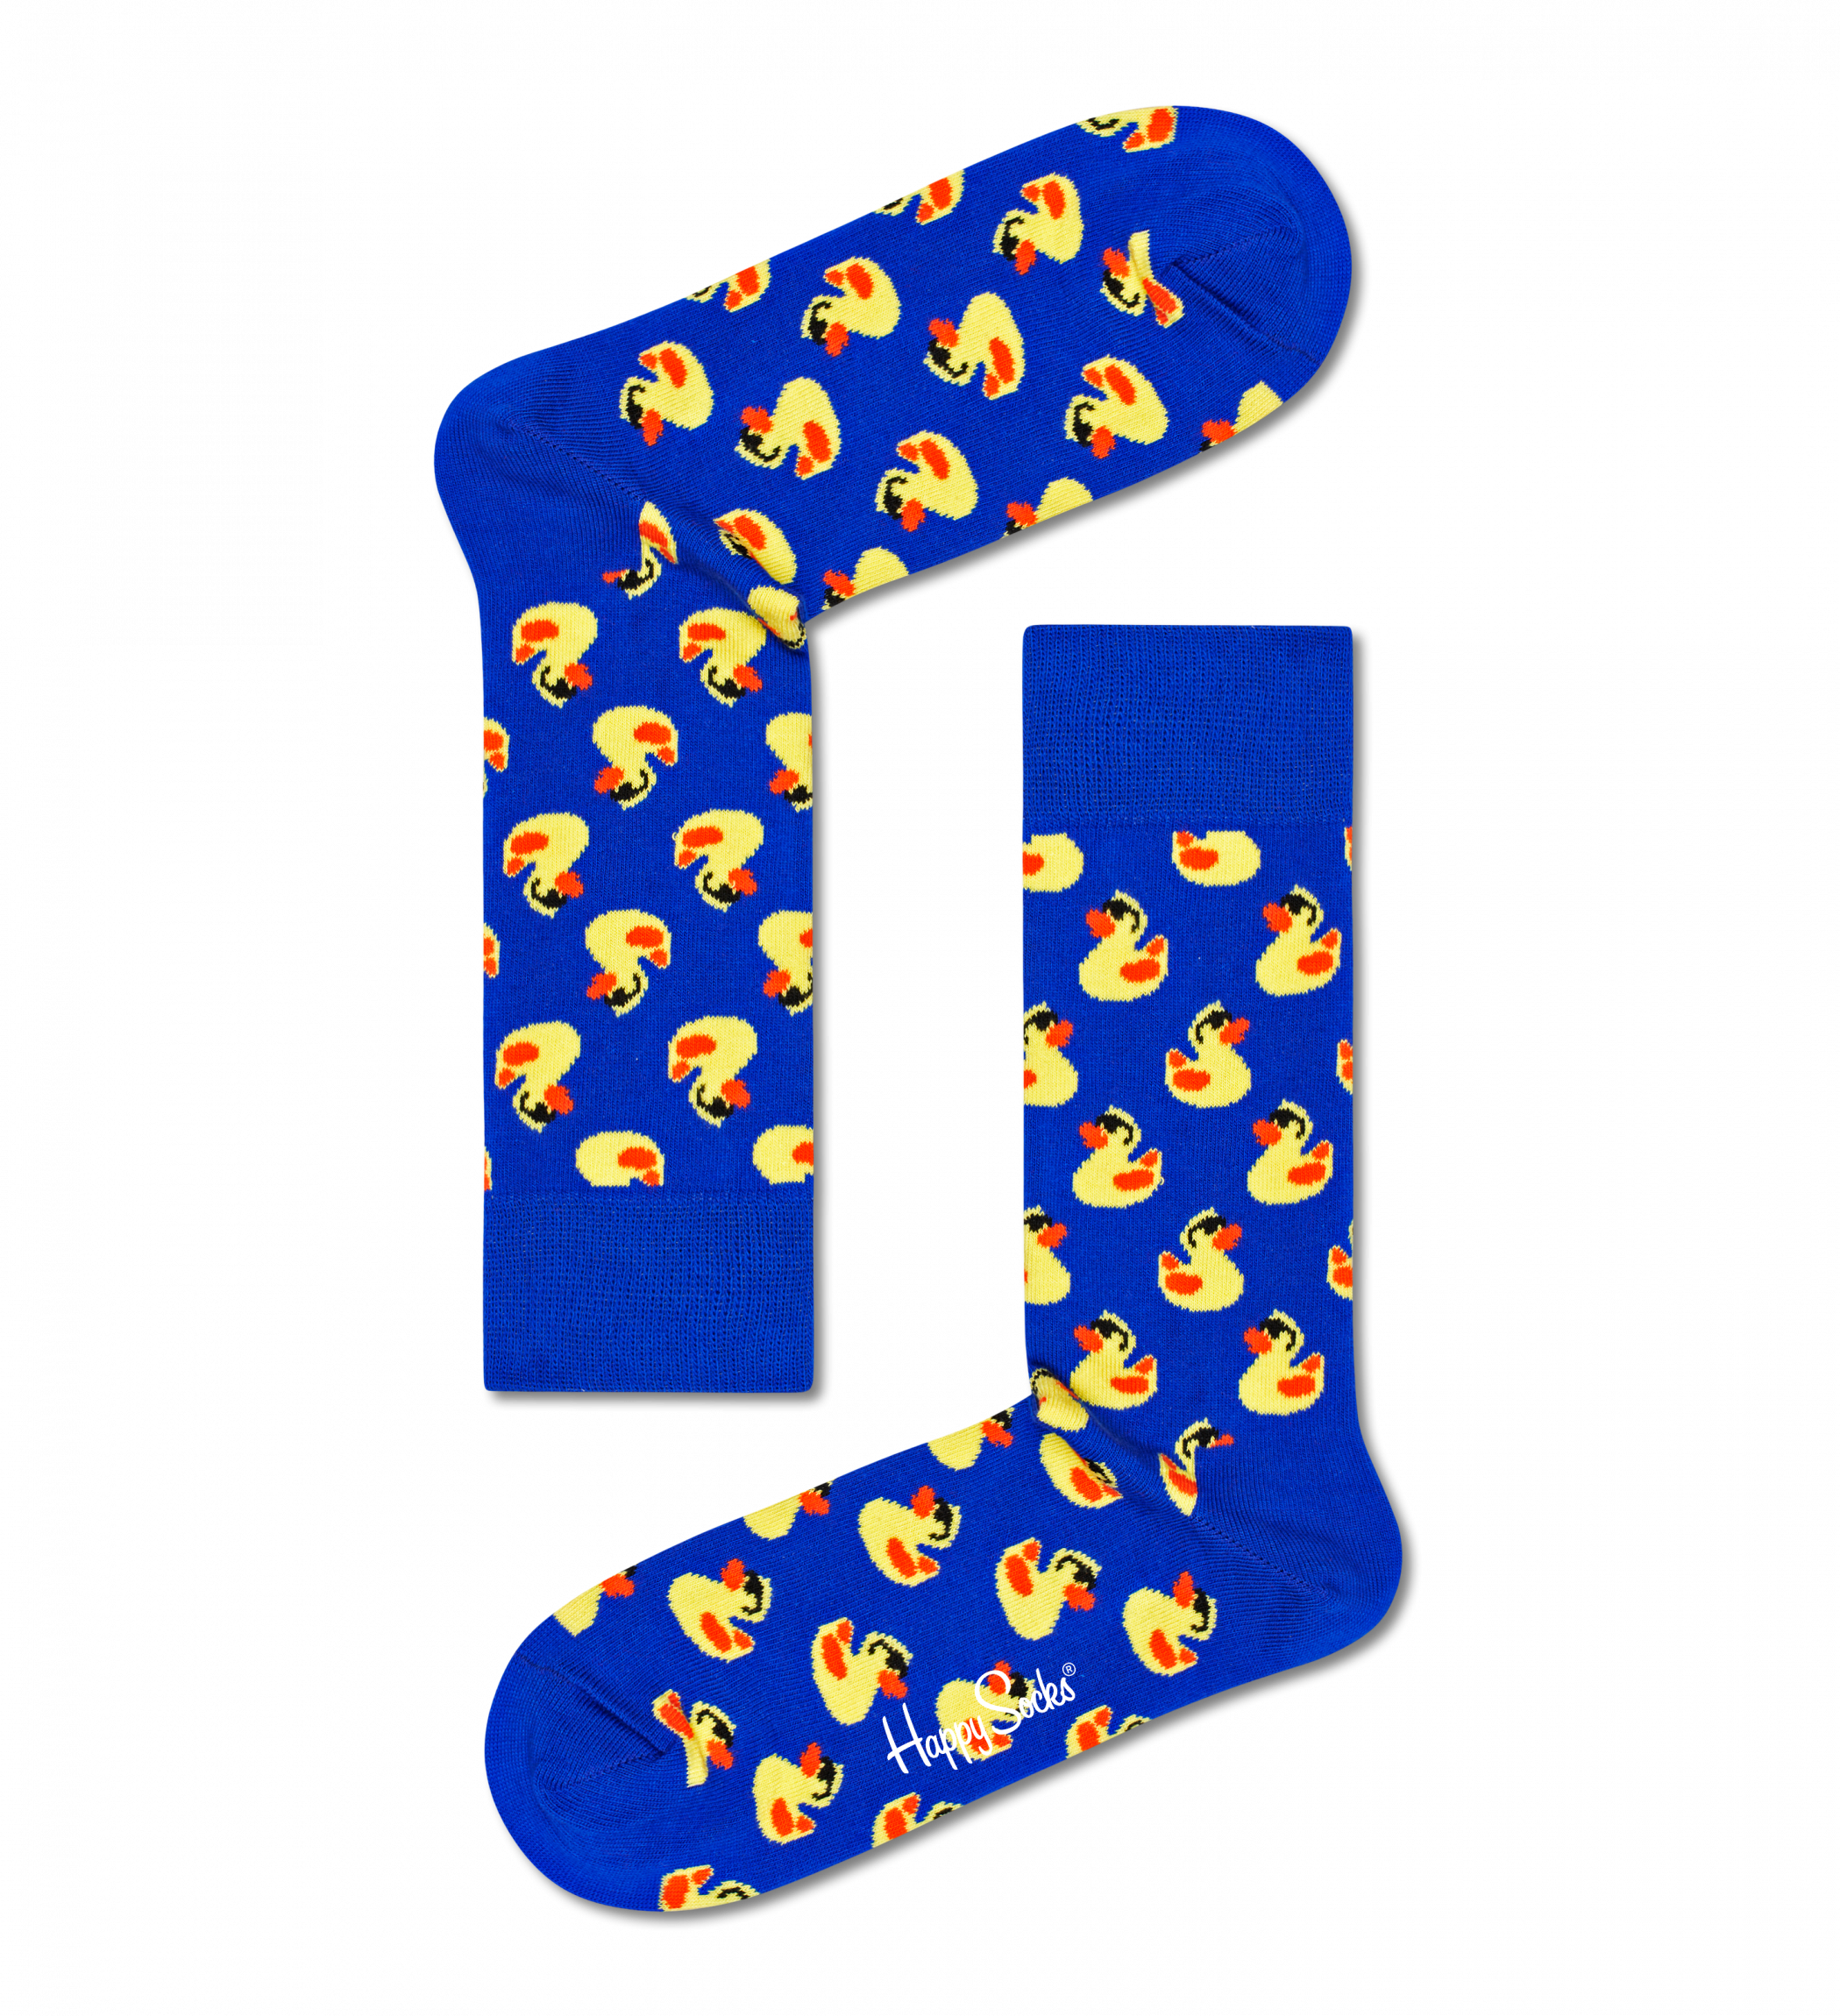 Modré ponožky Happy Socks s kačenkami, vzor Rubber Duck